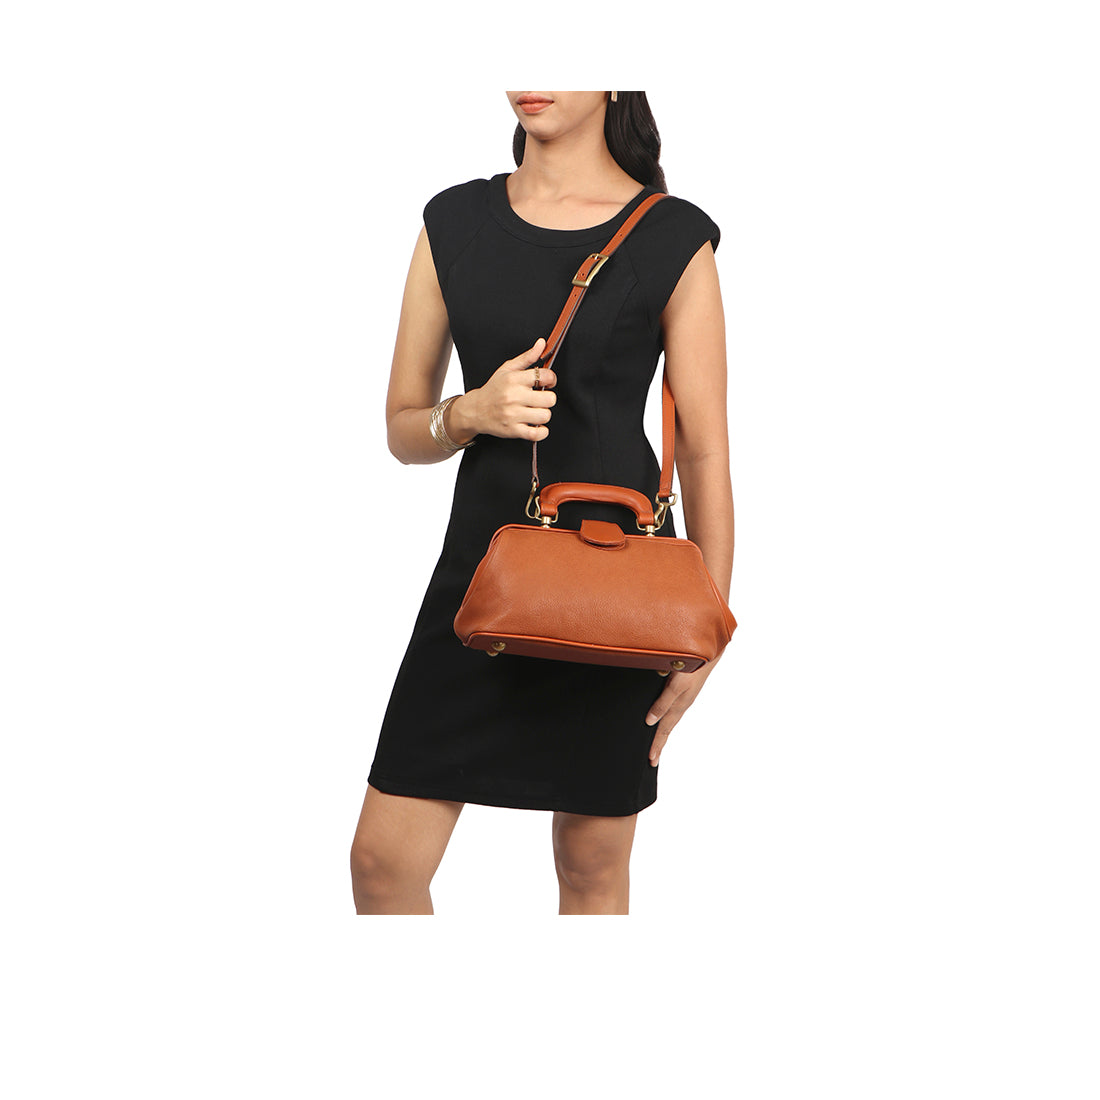 BRAND LEATHER Brown Hand-held Bag Women Genuine Leather Satchel Handbag  Shoulder Purse Crossbody Bag brown - Price in India | Flipkart.com